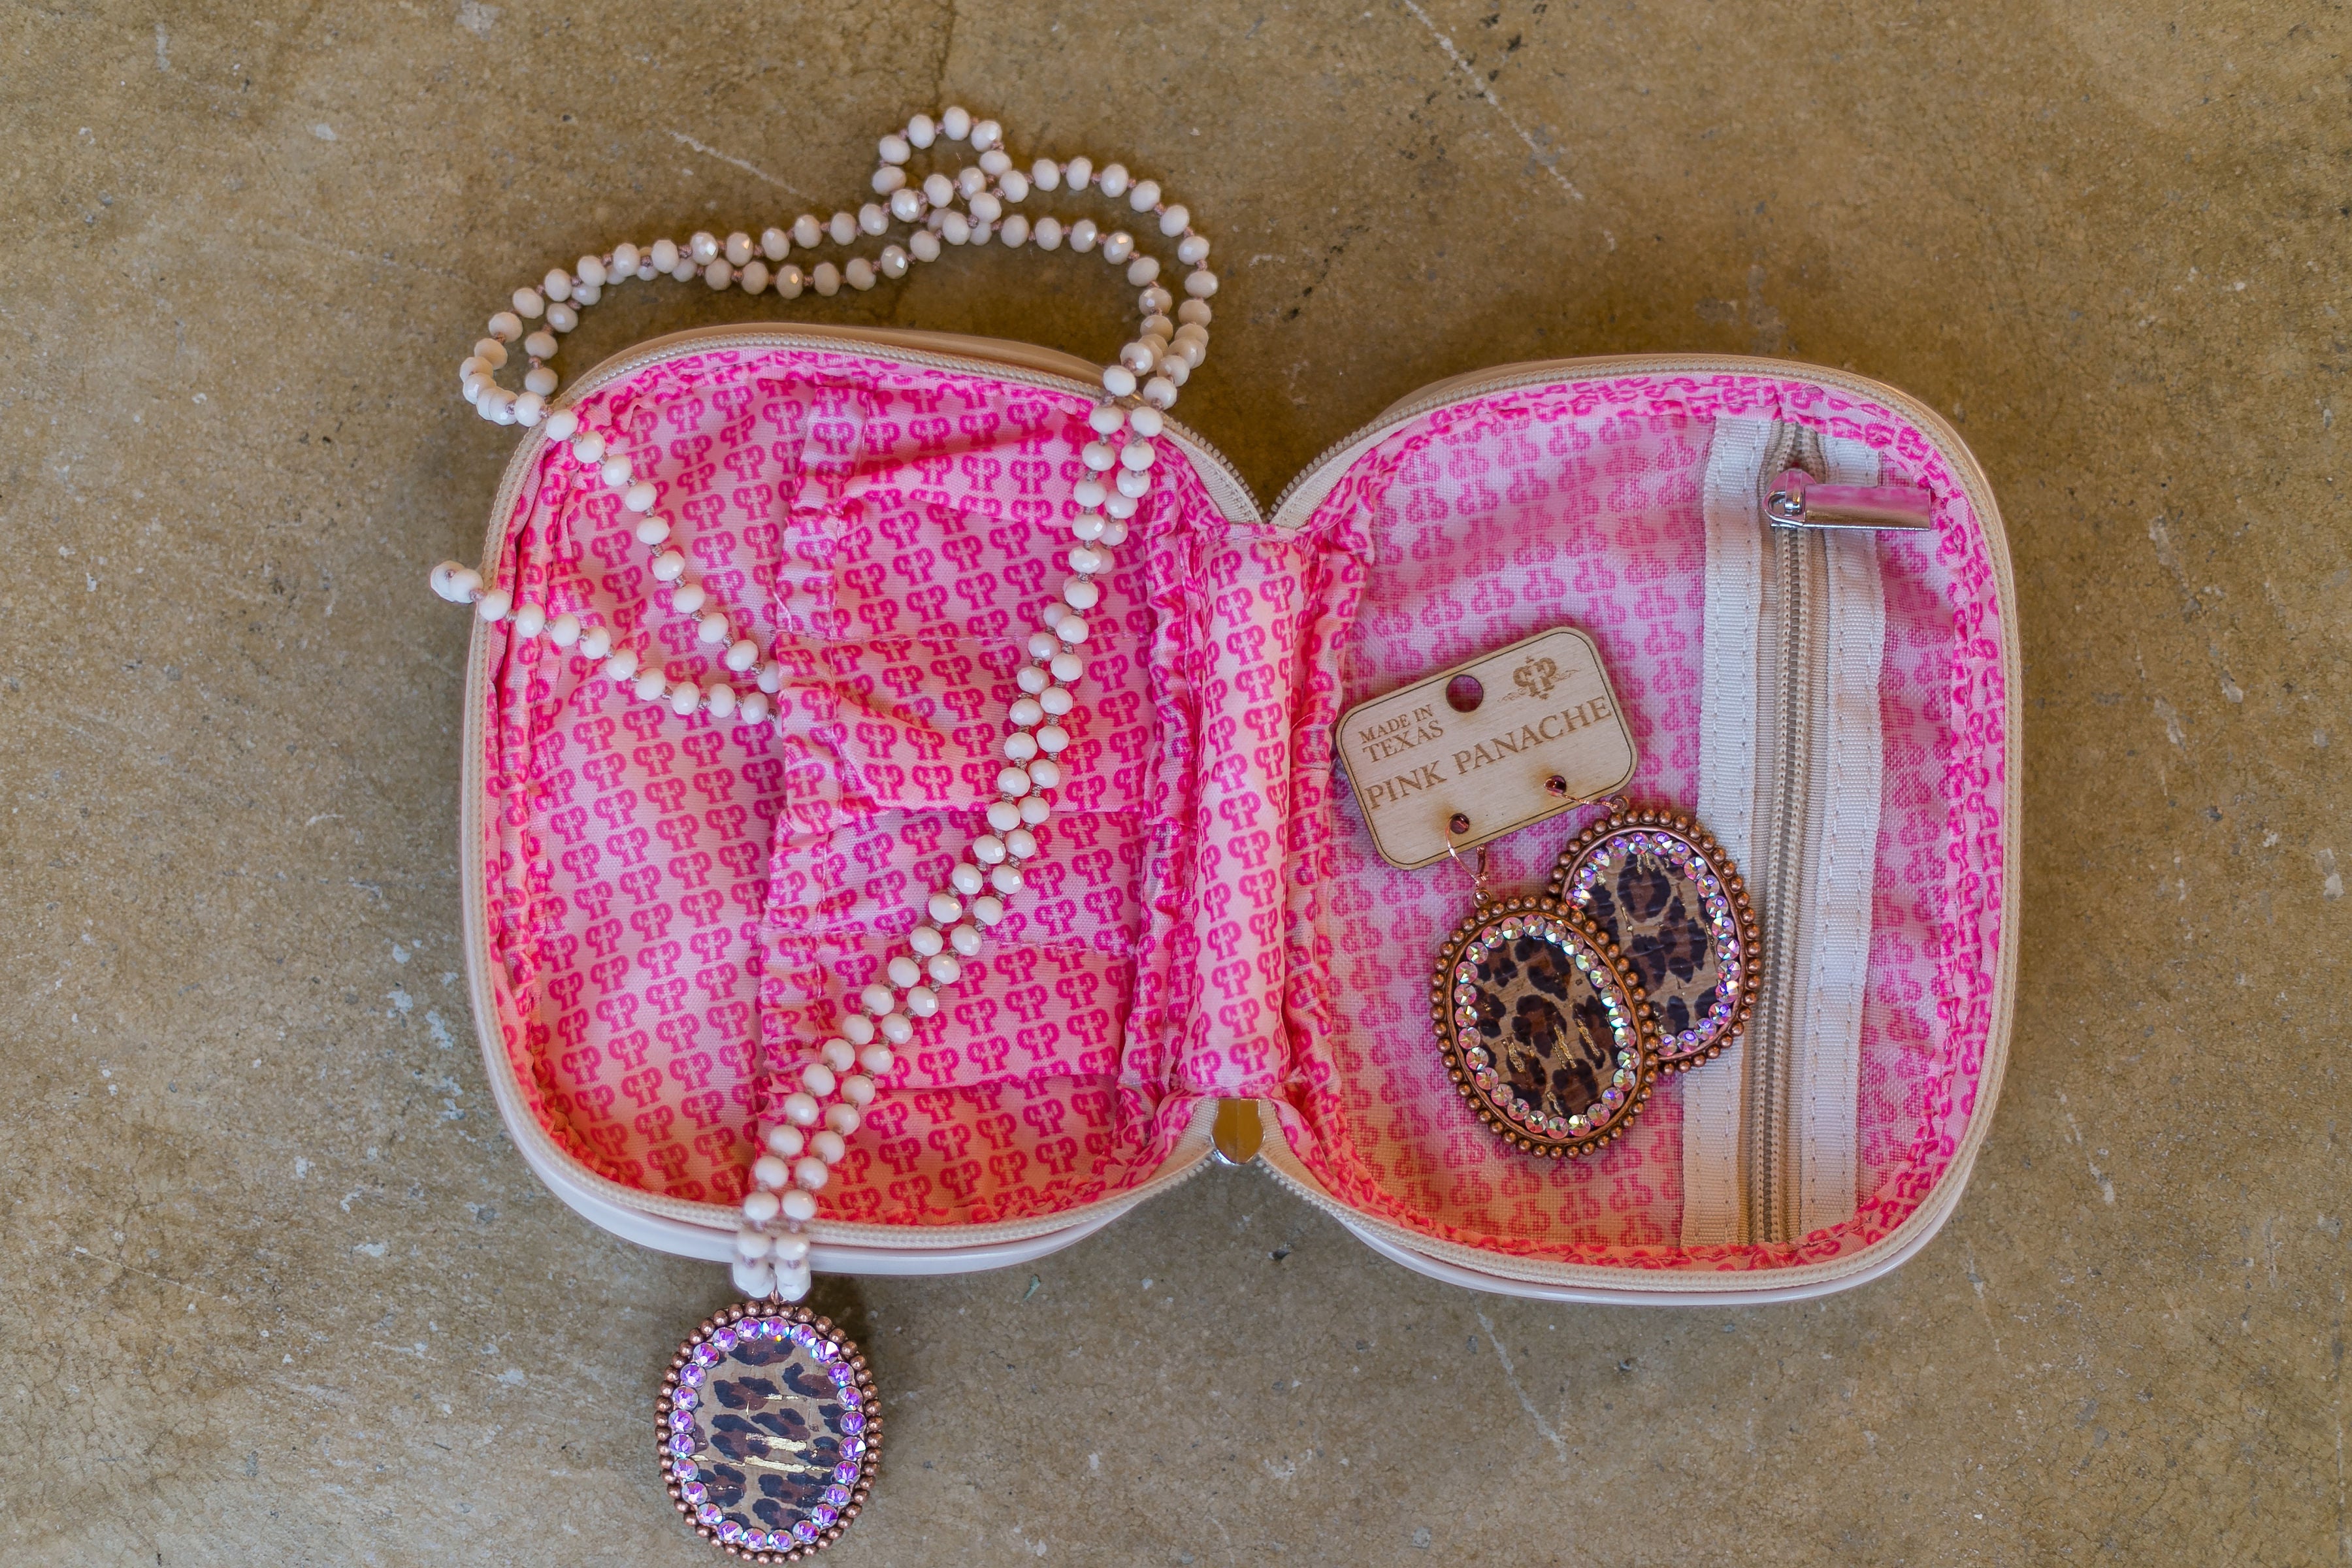 Cute Trendy Chic Jewelry Bag | Pink Panache